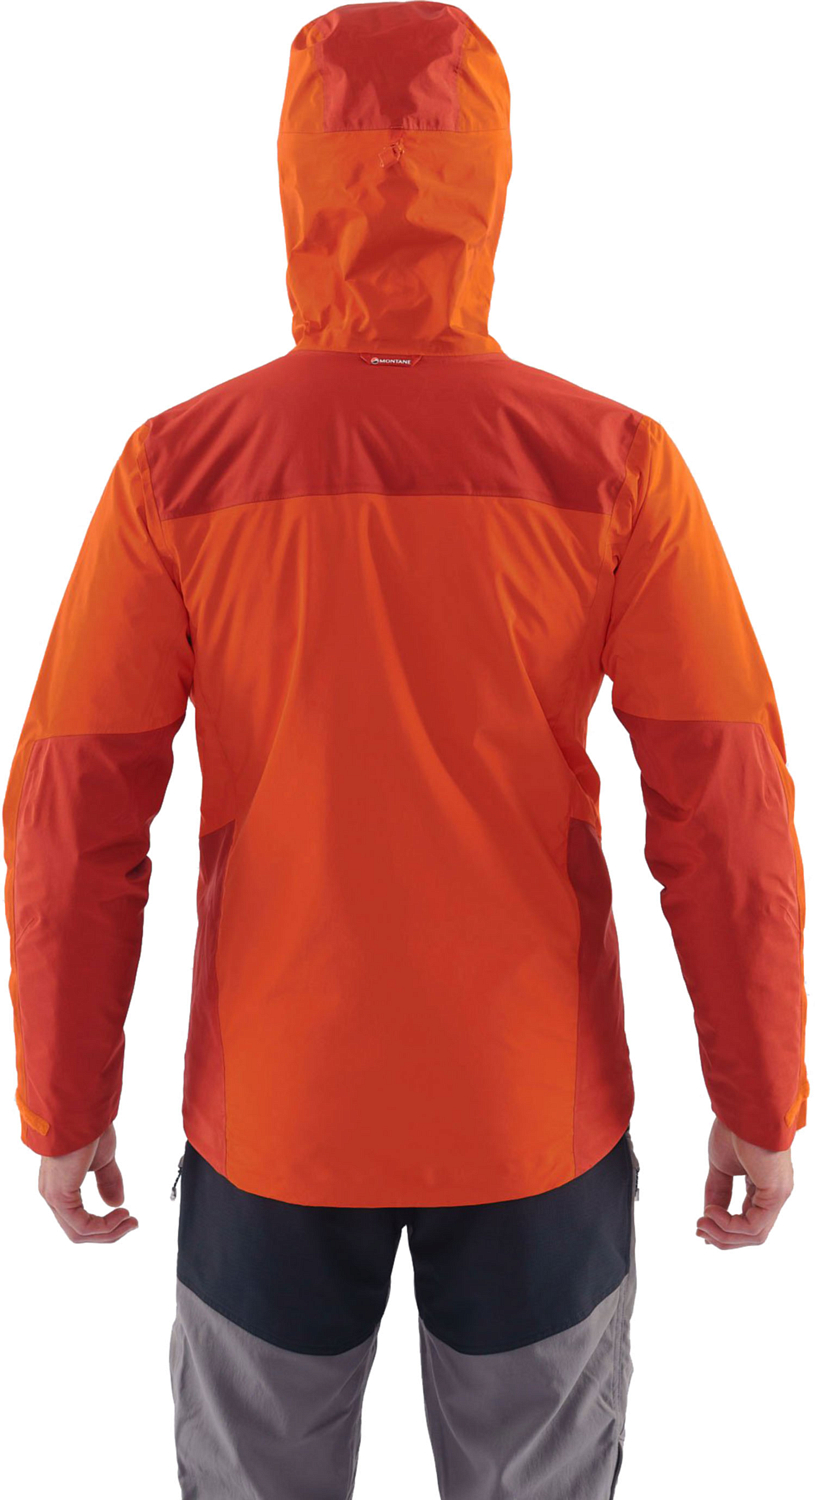 Куртка для активного отдыха Montane Alpine Resolve Firefly Orange